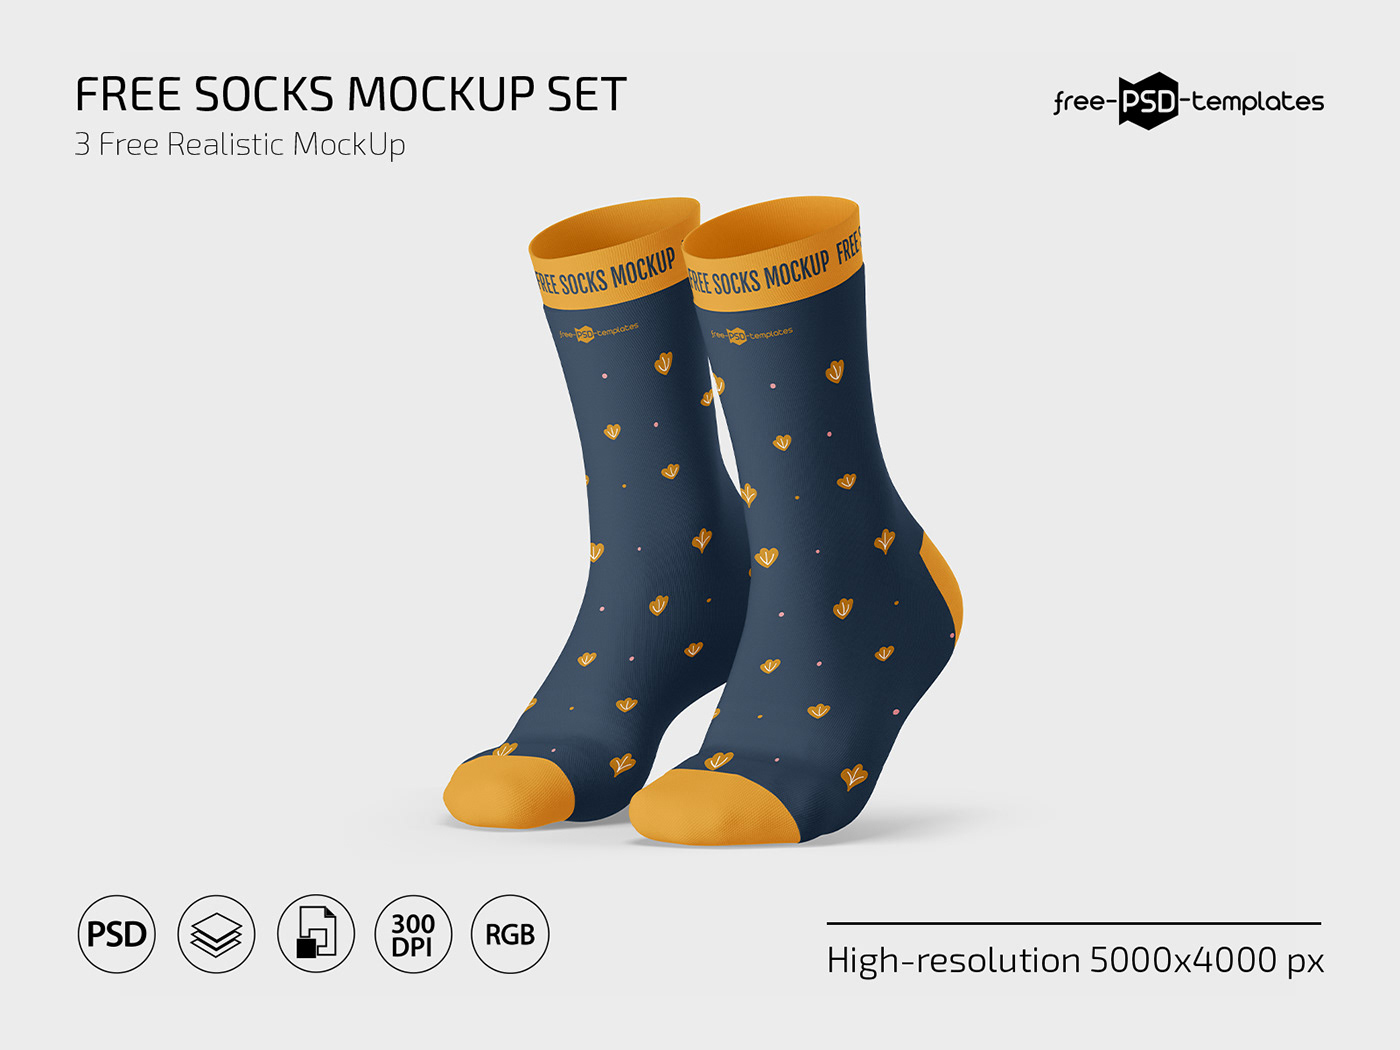 Free Socks Mockup on Behance